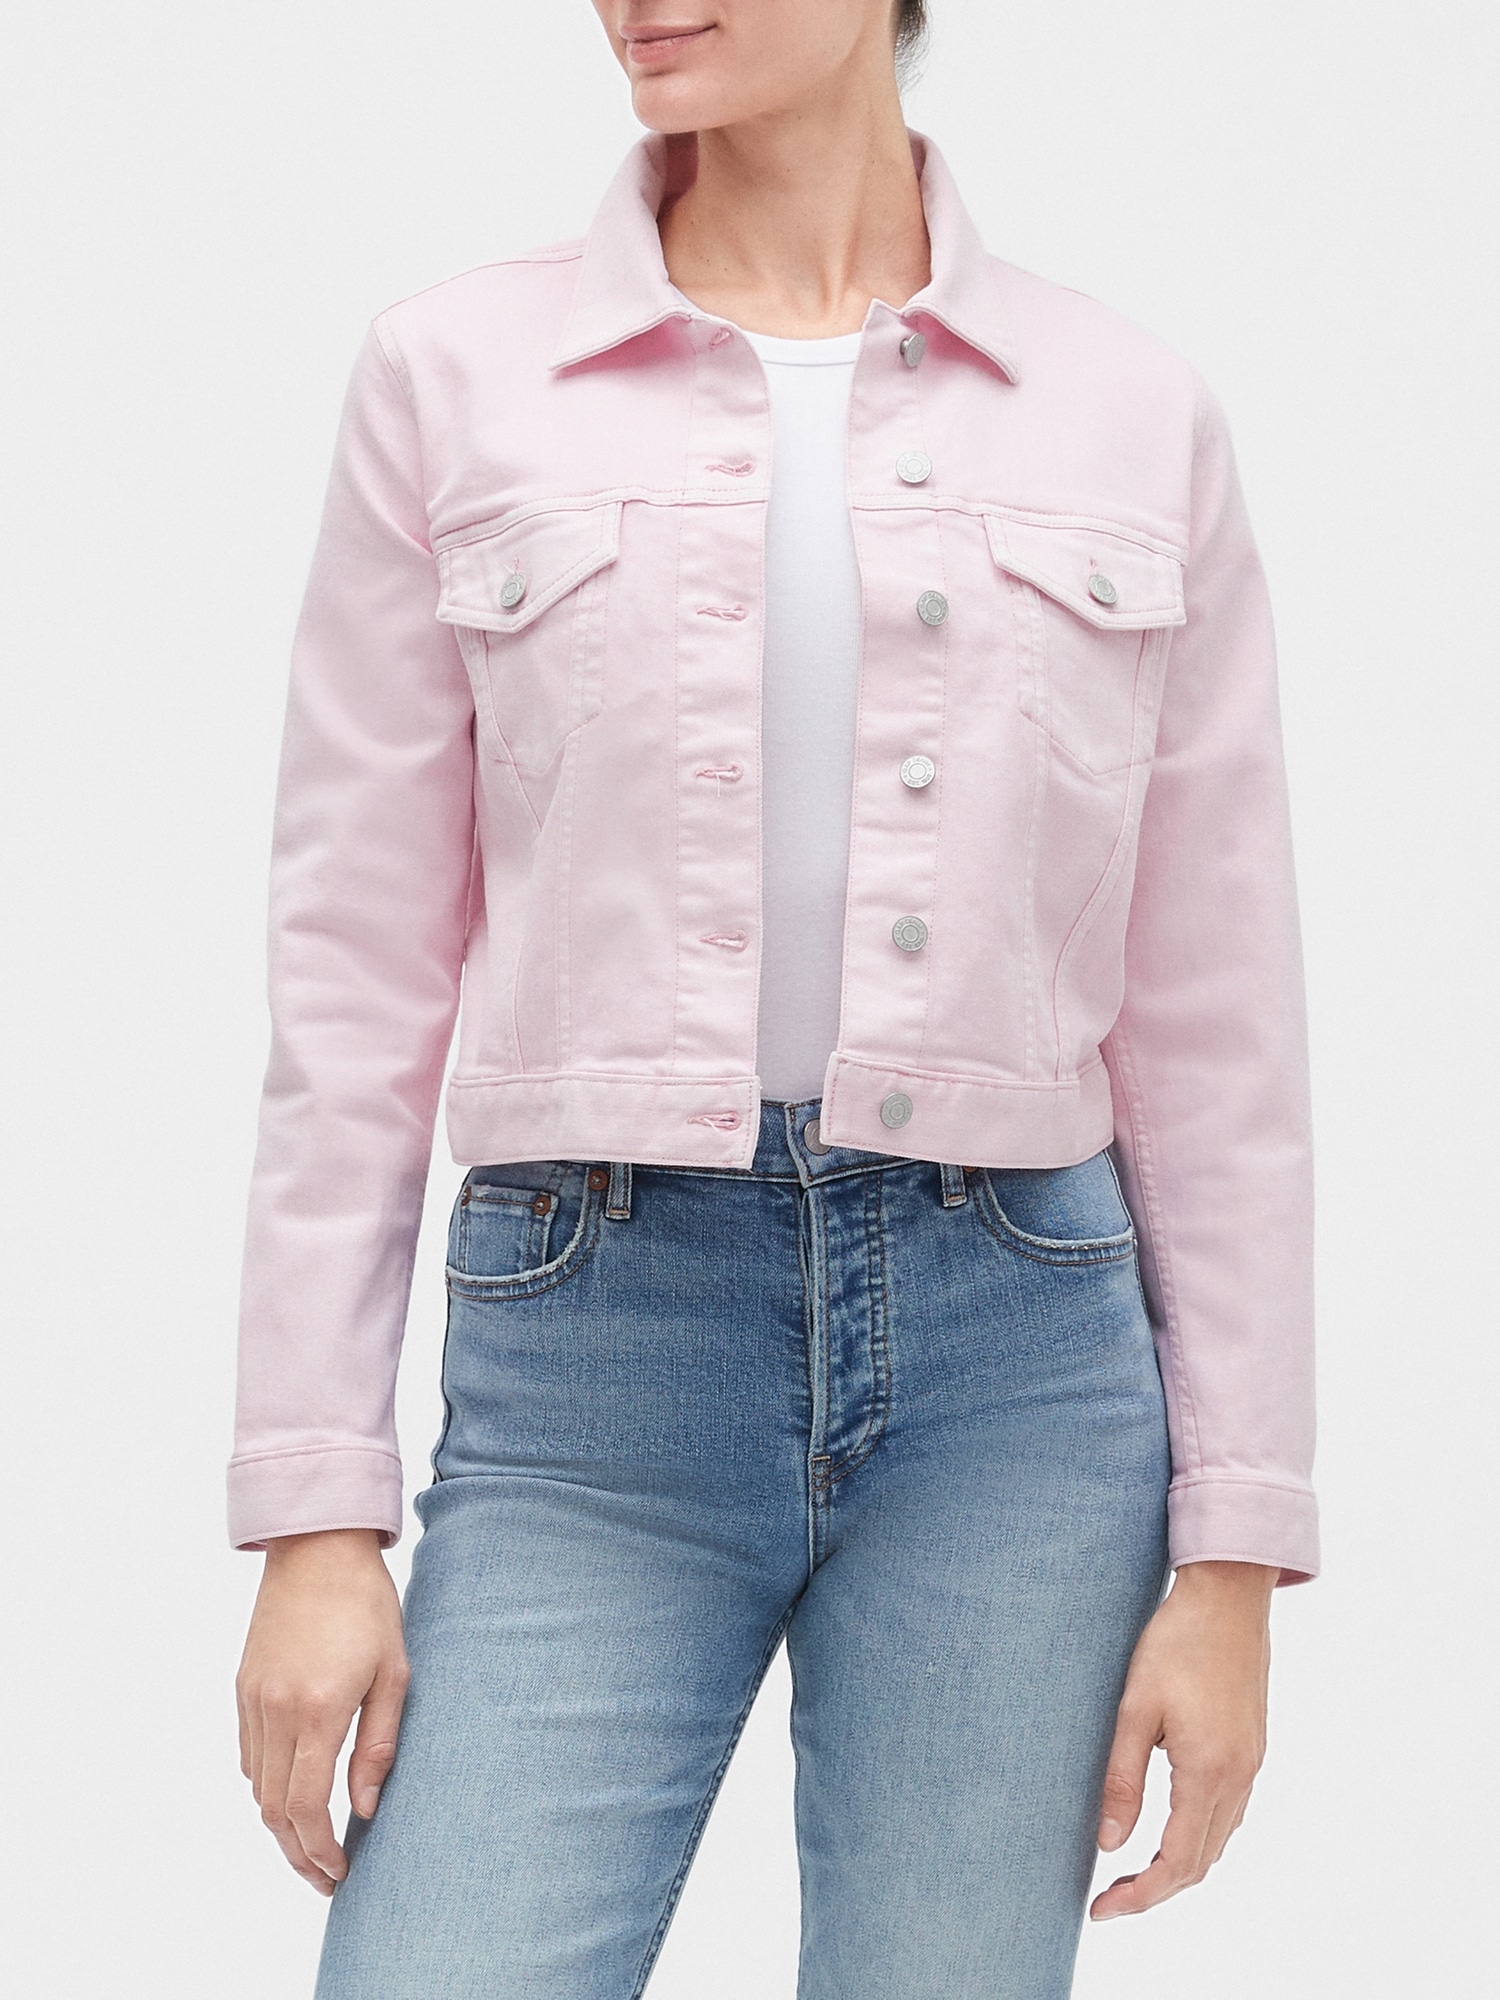 denim jacket with pink shirt